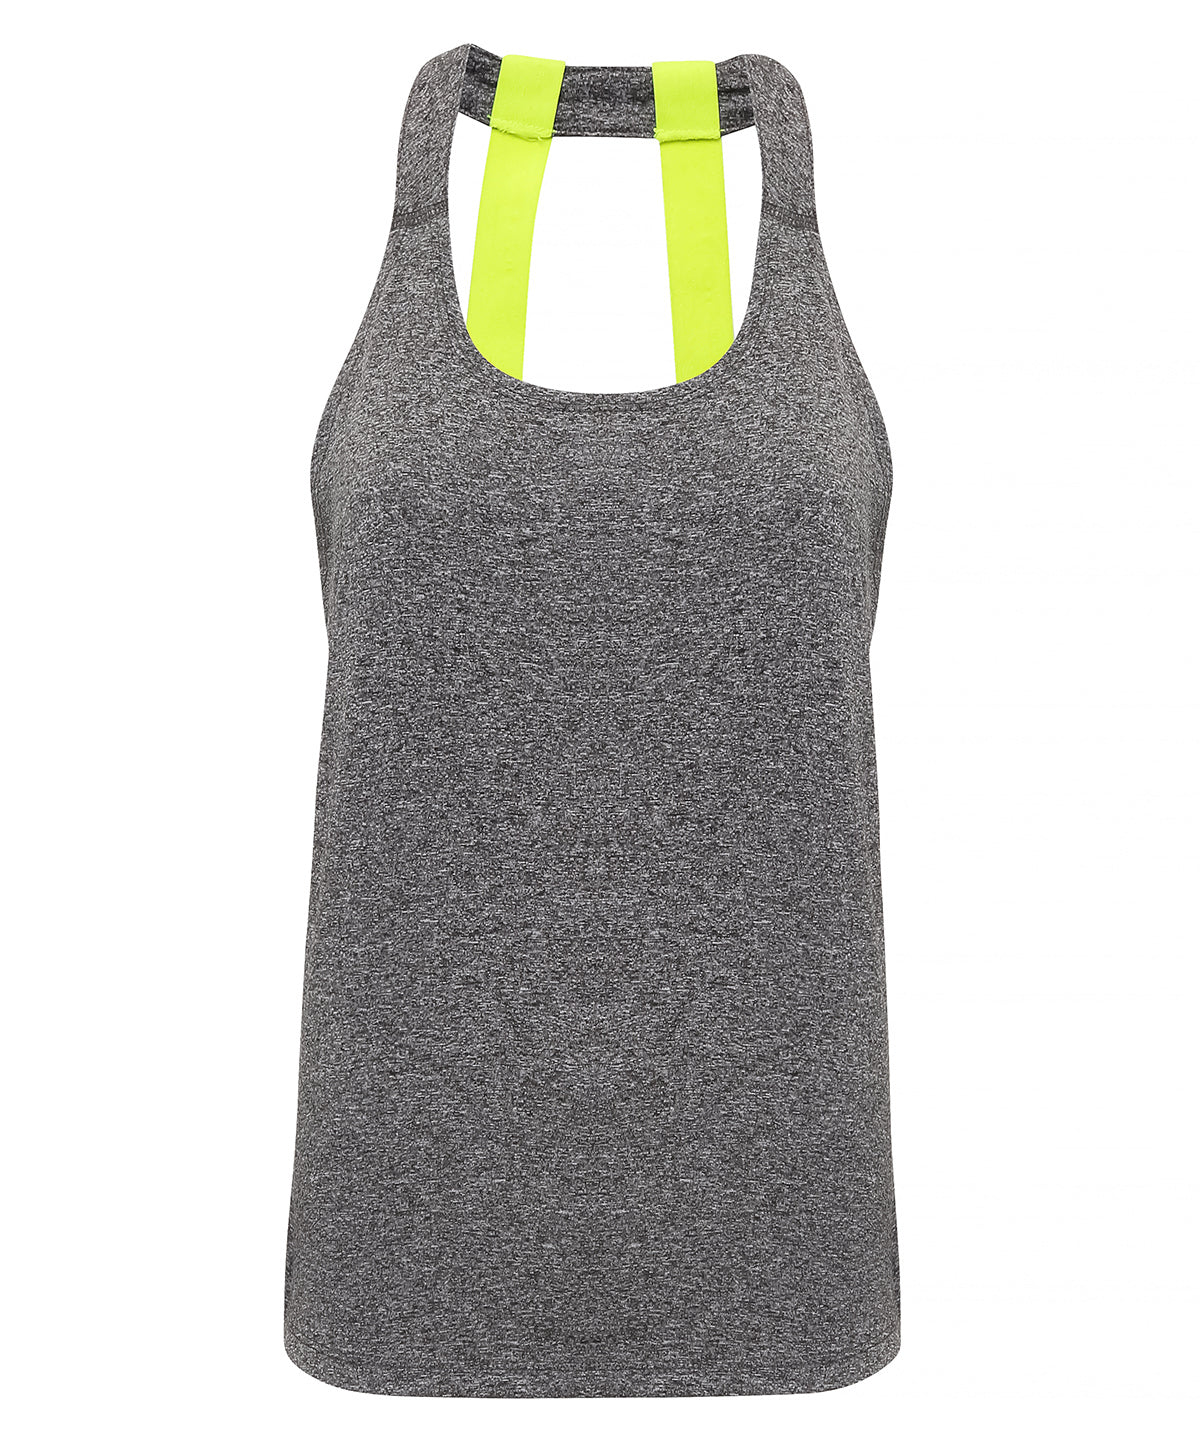 Vesti - Women's TriDri® Double Strap Back Vest